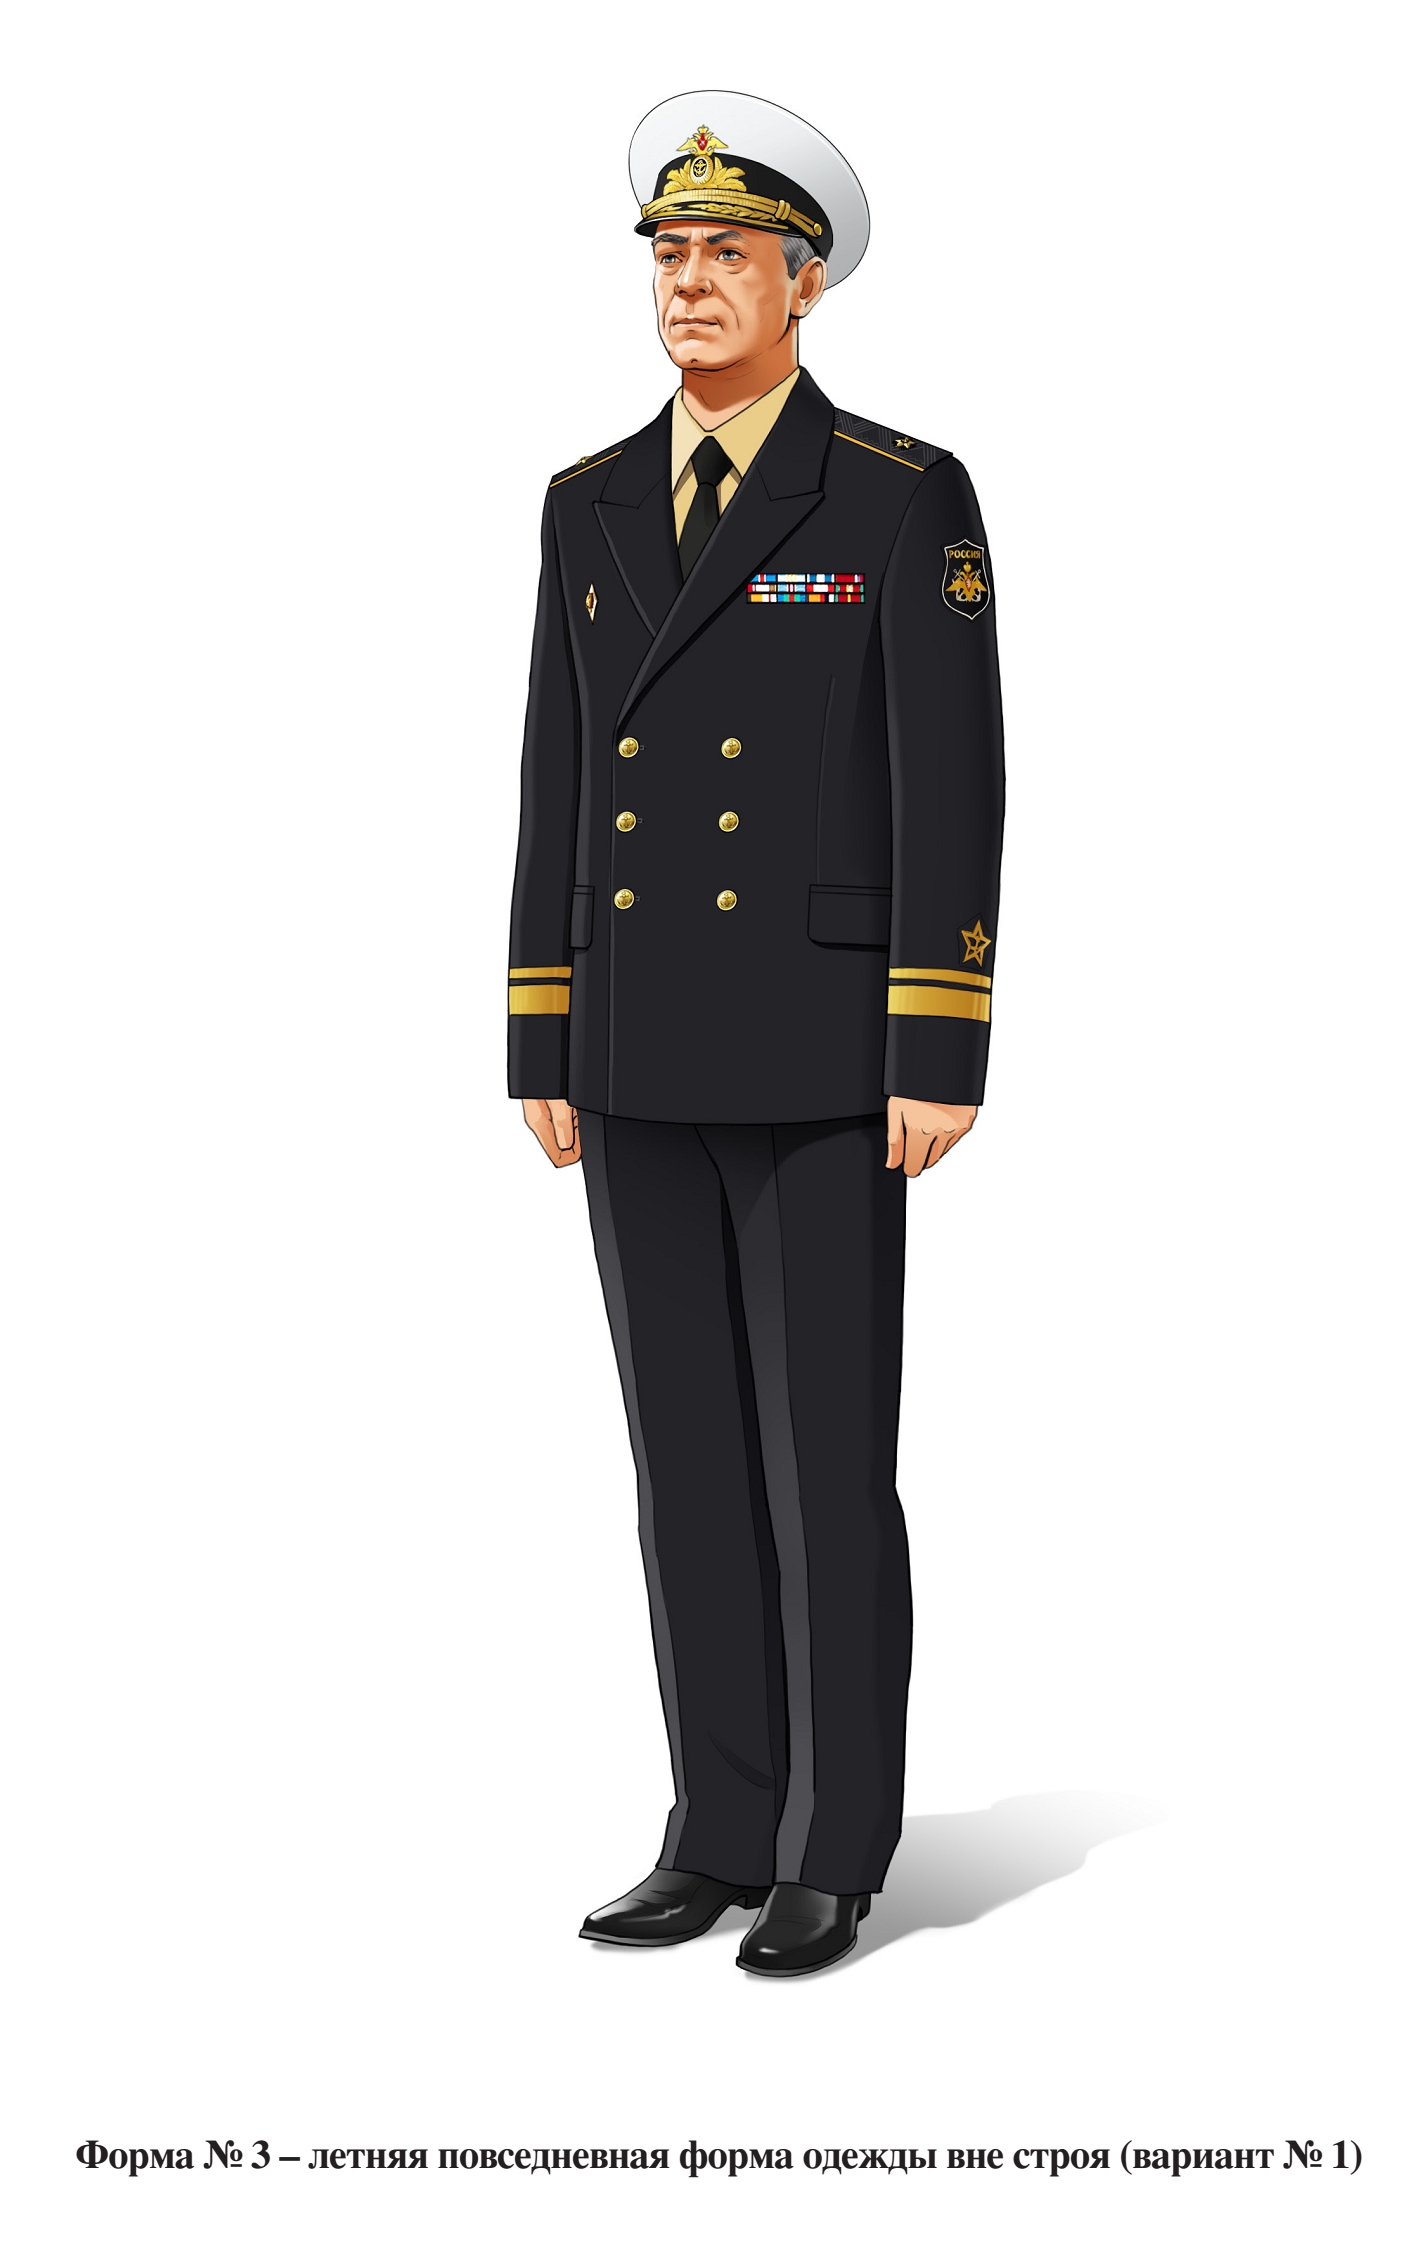 Адмирал, летняя повседневная форма ВМФ вне строя